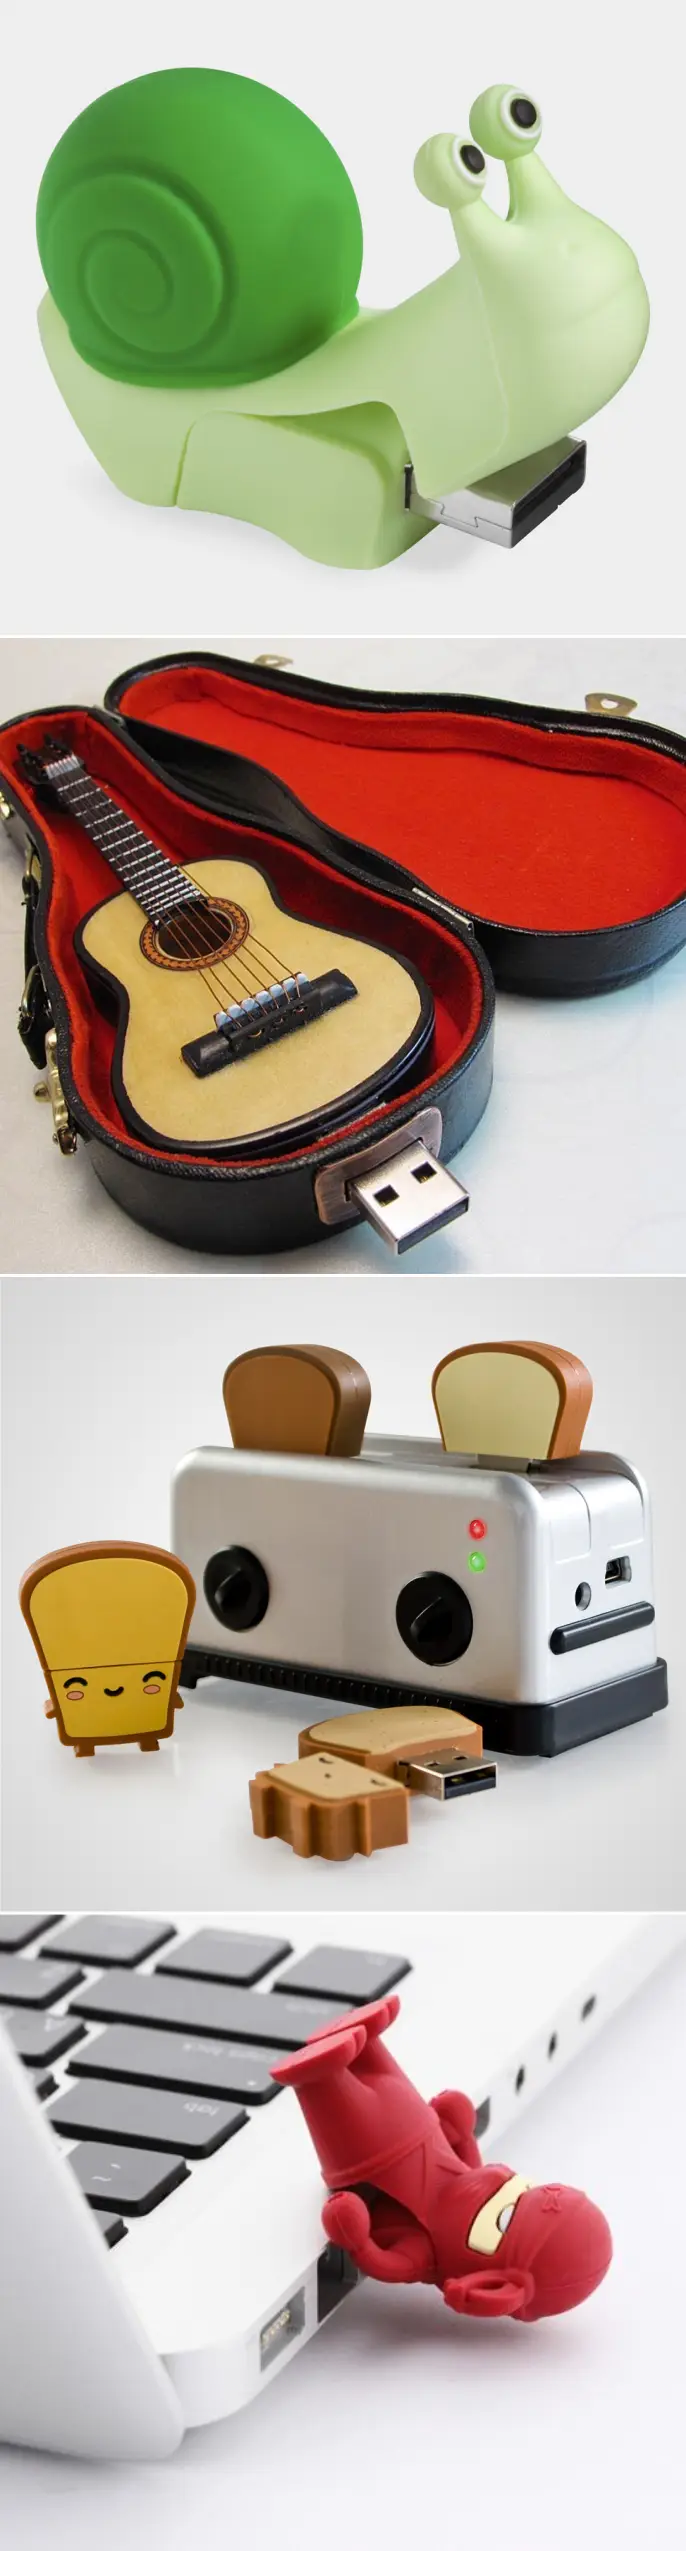 https://www.dontpayfull.com/blog/wp-content/uploads/2015/04/The-Cutest-20-Household-Gadgets-Fashionable-USB-Sticks.jpg.webp